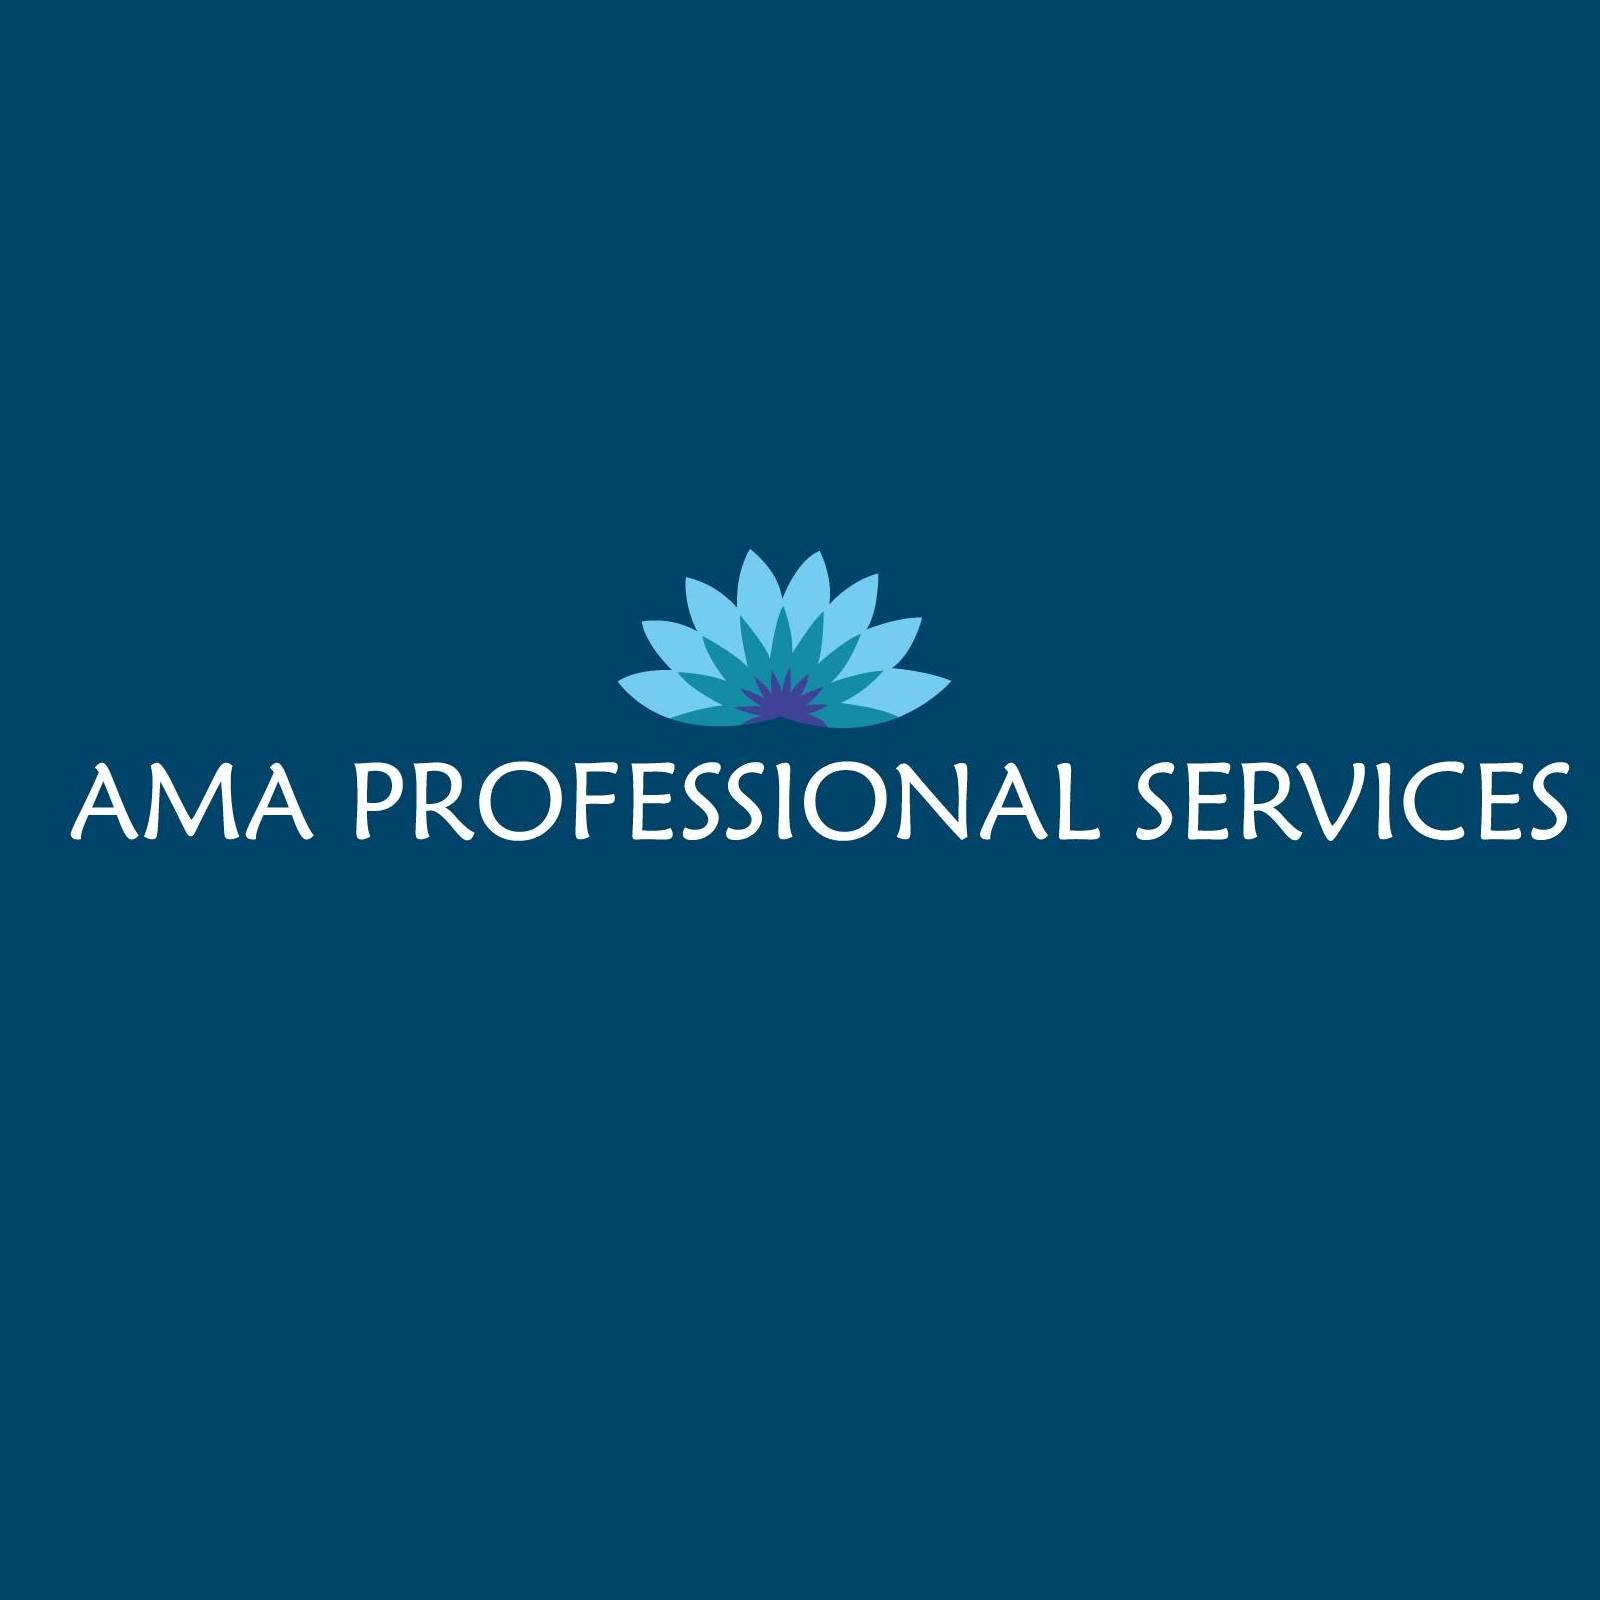 AMA Professional Services